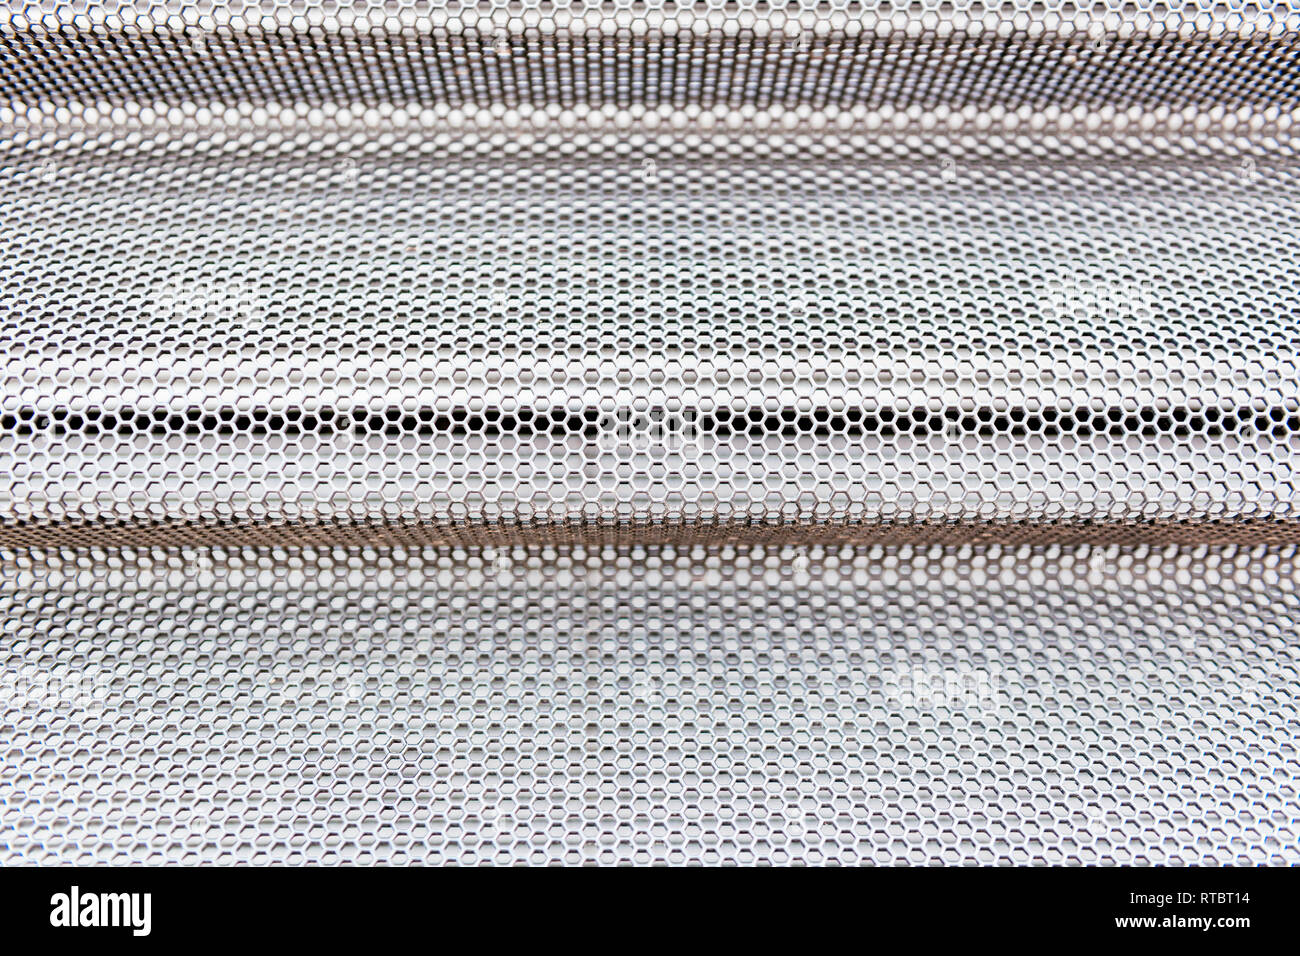 Aluminium metallic surface with abstract pattern on modern industrial equipment Stock Photo